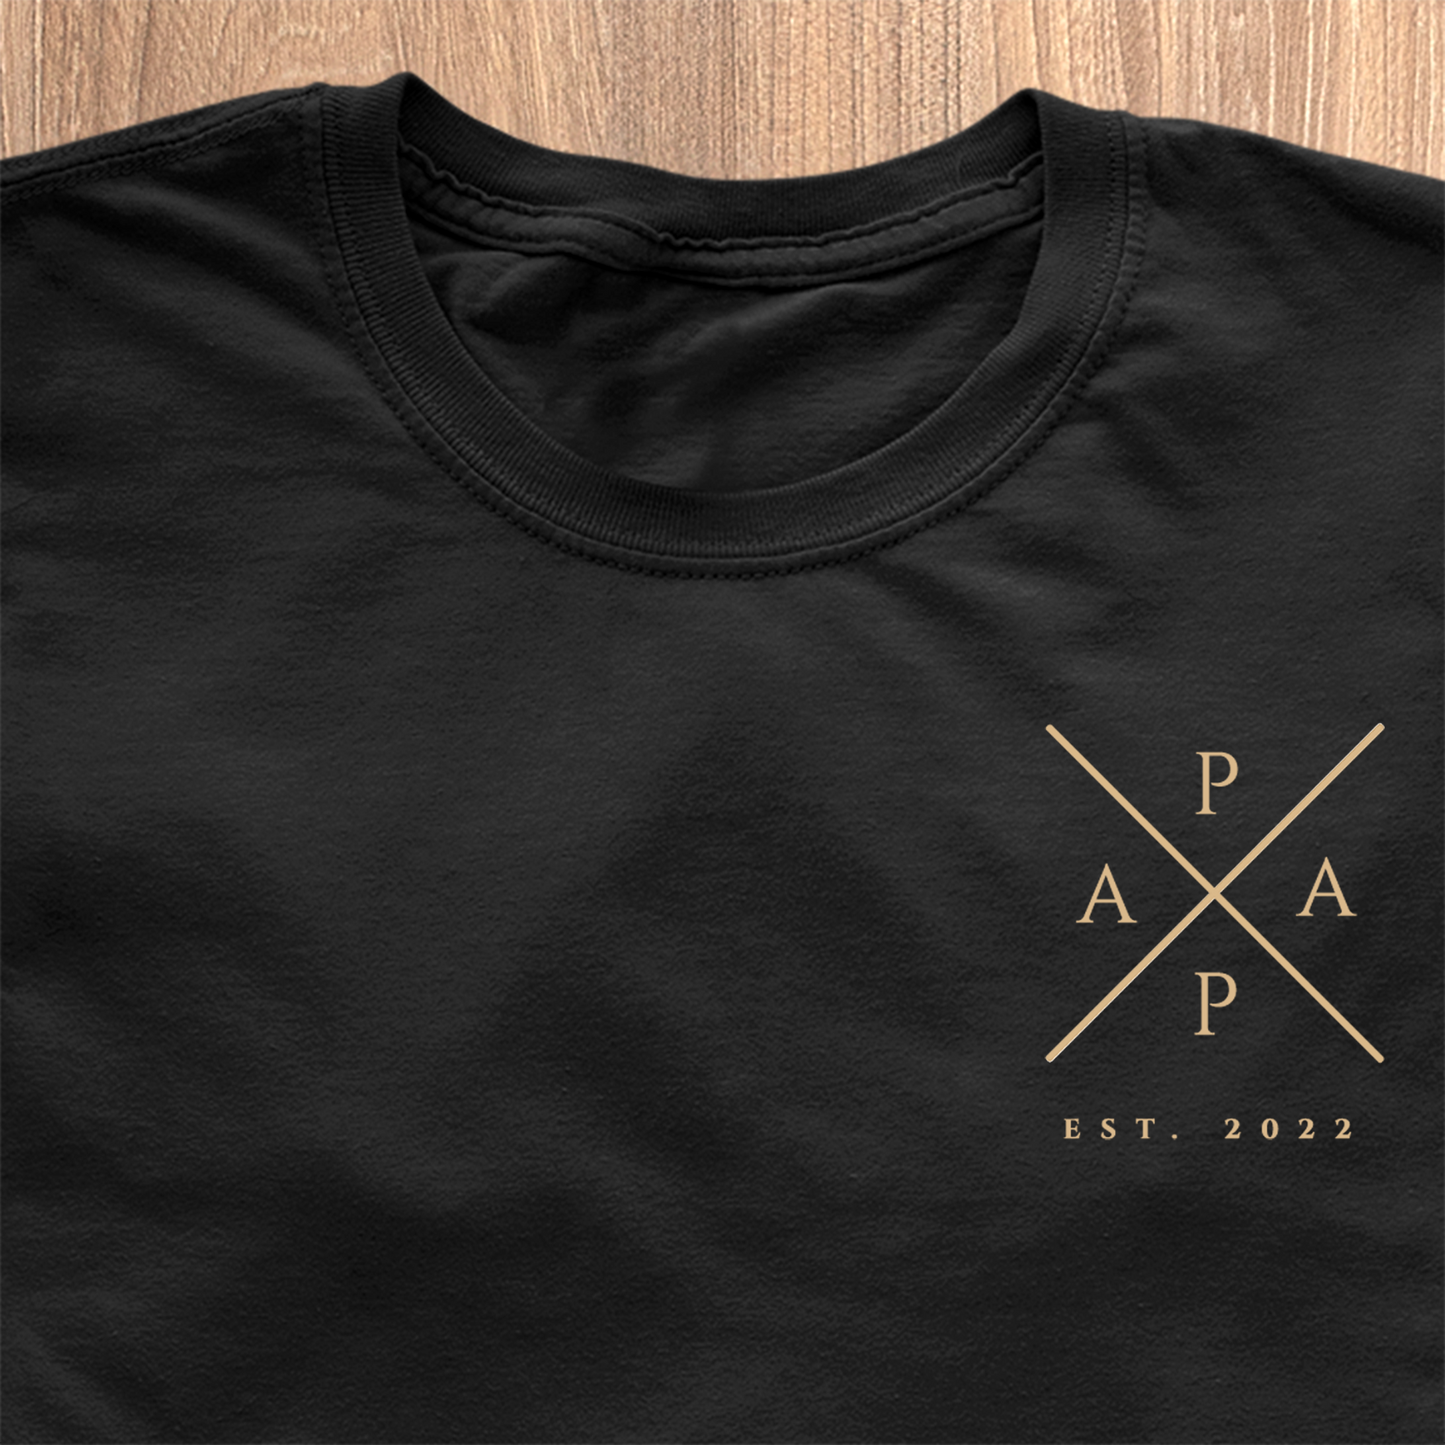 Papa Cross T-Shirt - Datum gepersonaliseerd